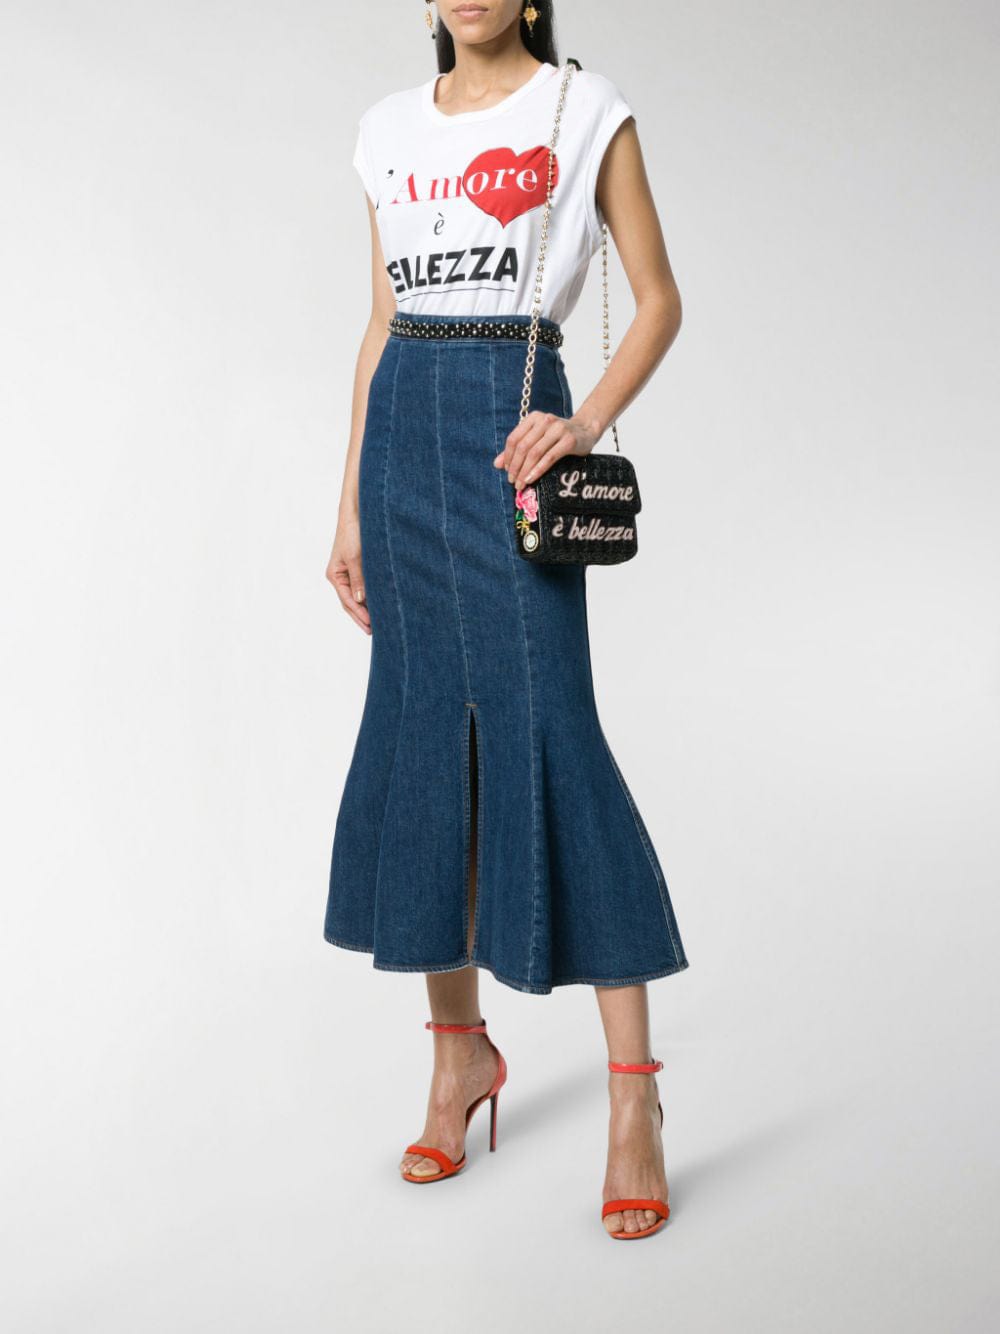 Dolce & Gabbana DG Millennials L'amore è Bellezza Shoulder Bag